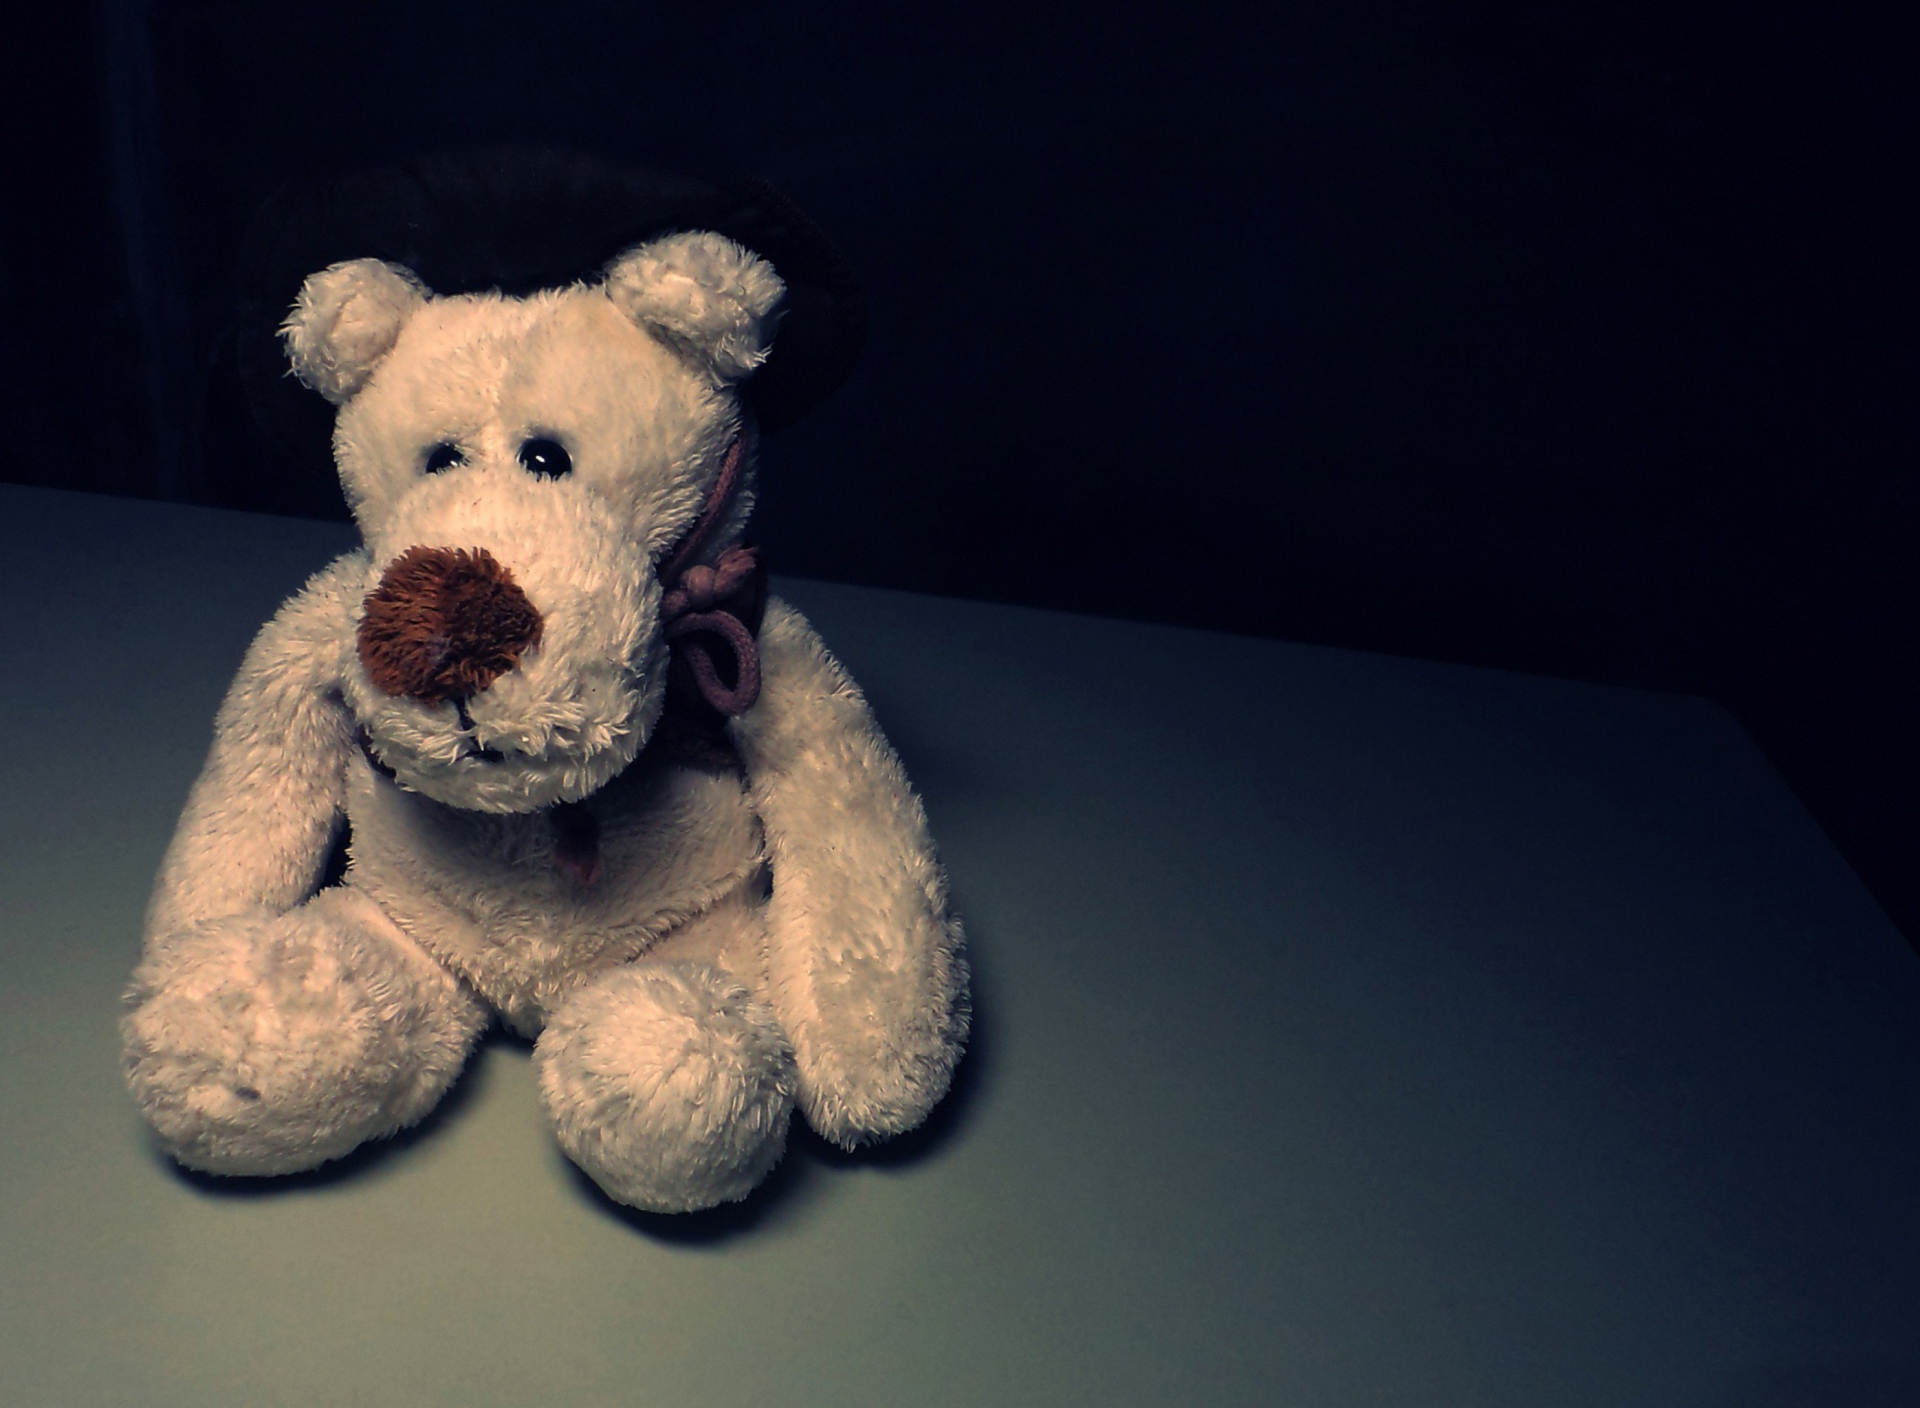 Sad Teddy Bear Sitting Alone wallpaper 1920x1408